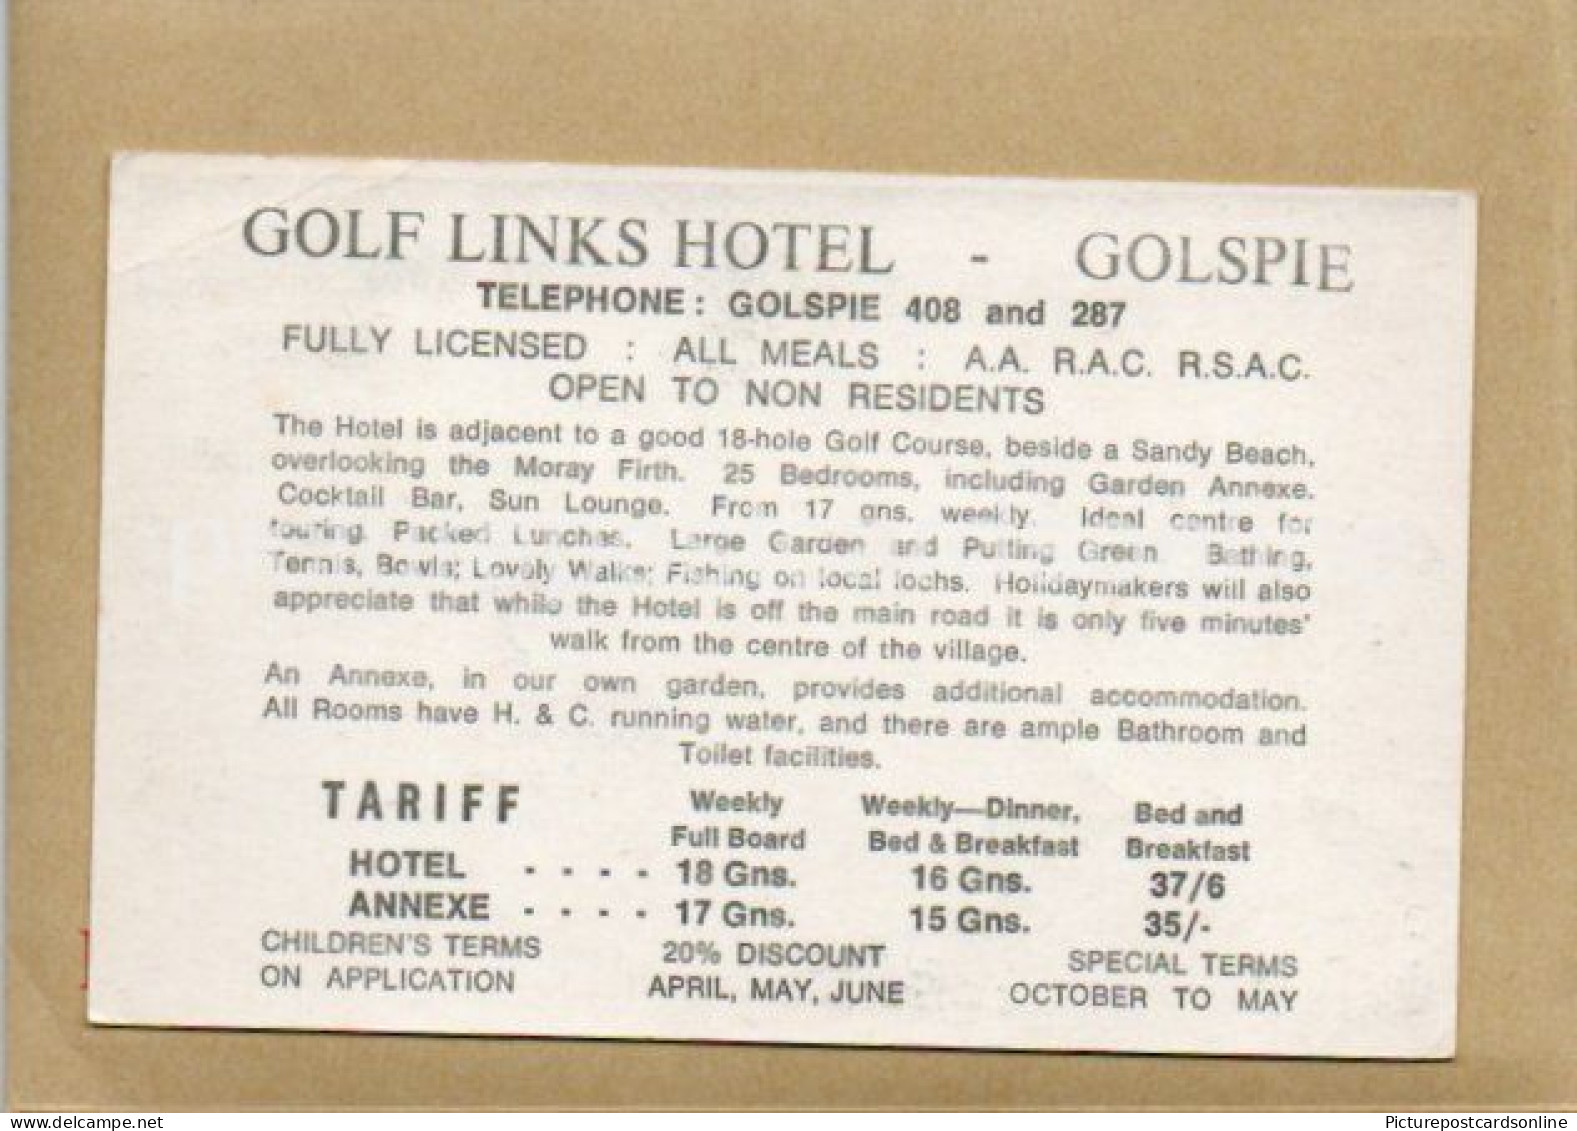 GOLSPIE THE GOLF LINKS HOTEL OLD B/W ADVERTISING CARD SUTHERLAND SCOTLAND - Sutherland